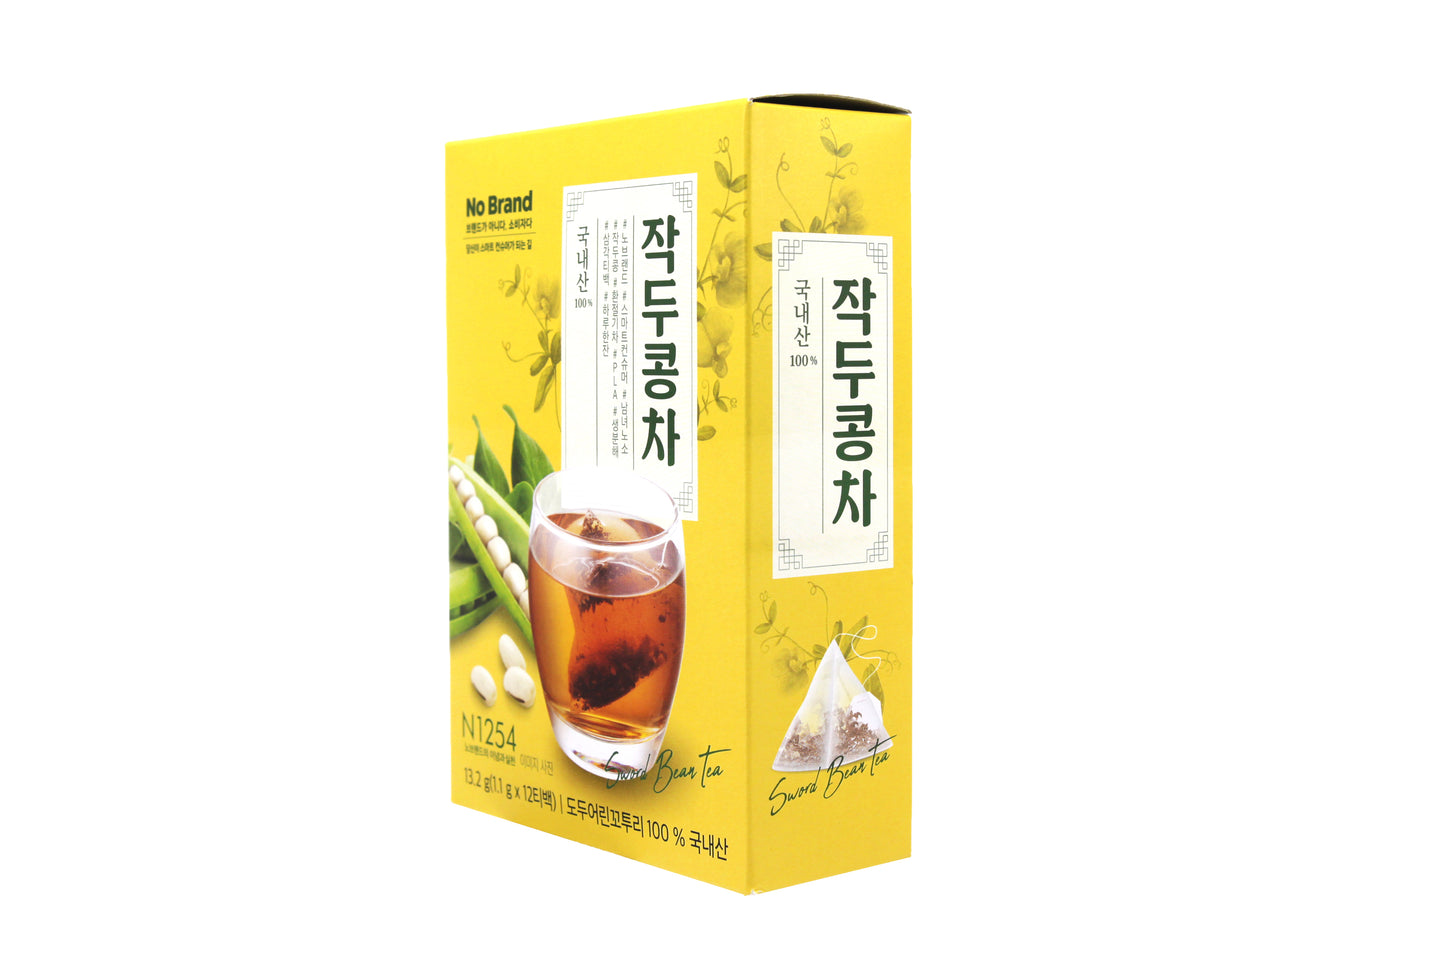 100% Natural Ingredients Tea Bags from Korea - K-food 13.2g (1.1g x 12T) Natural Organic Tea Traditional Asian Super Food (Sward Bean Tea)